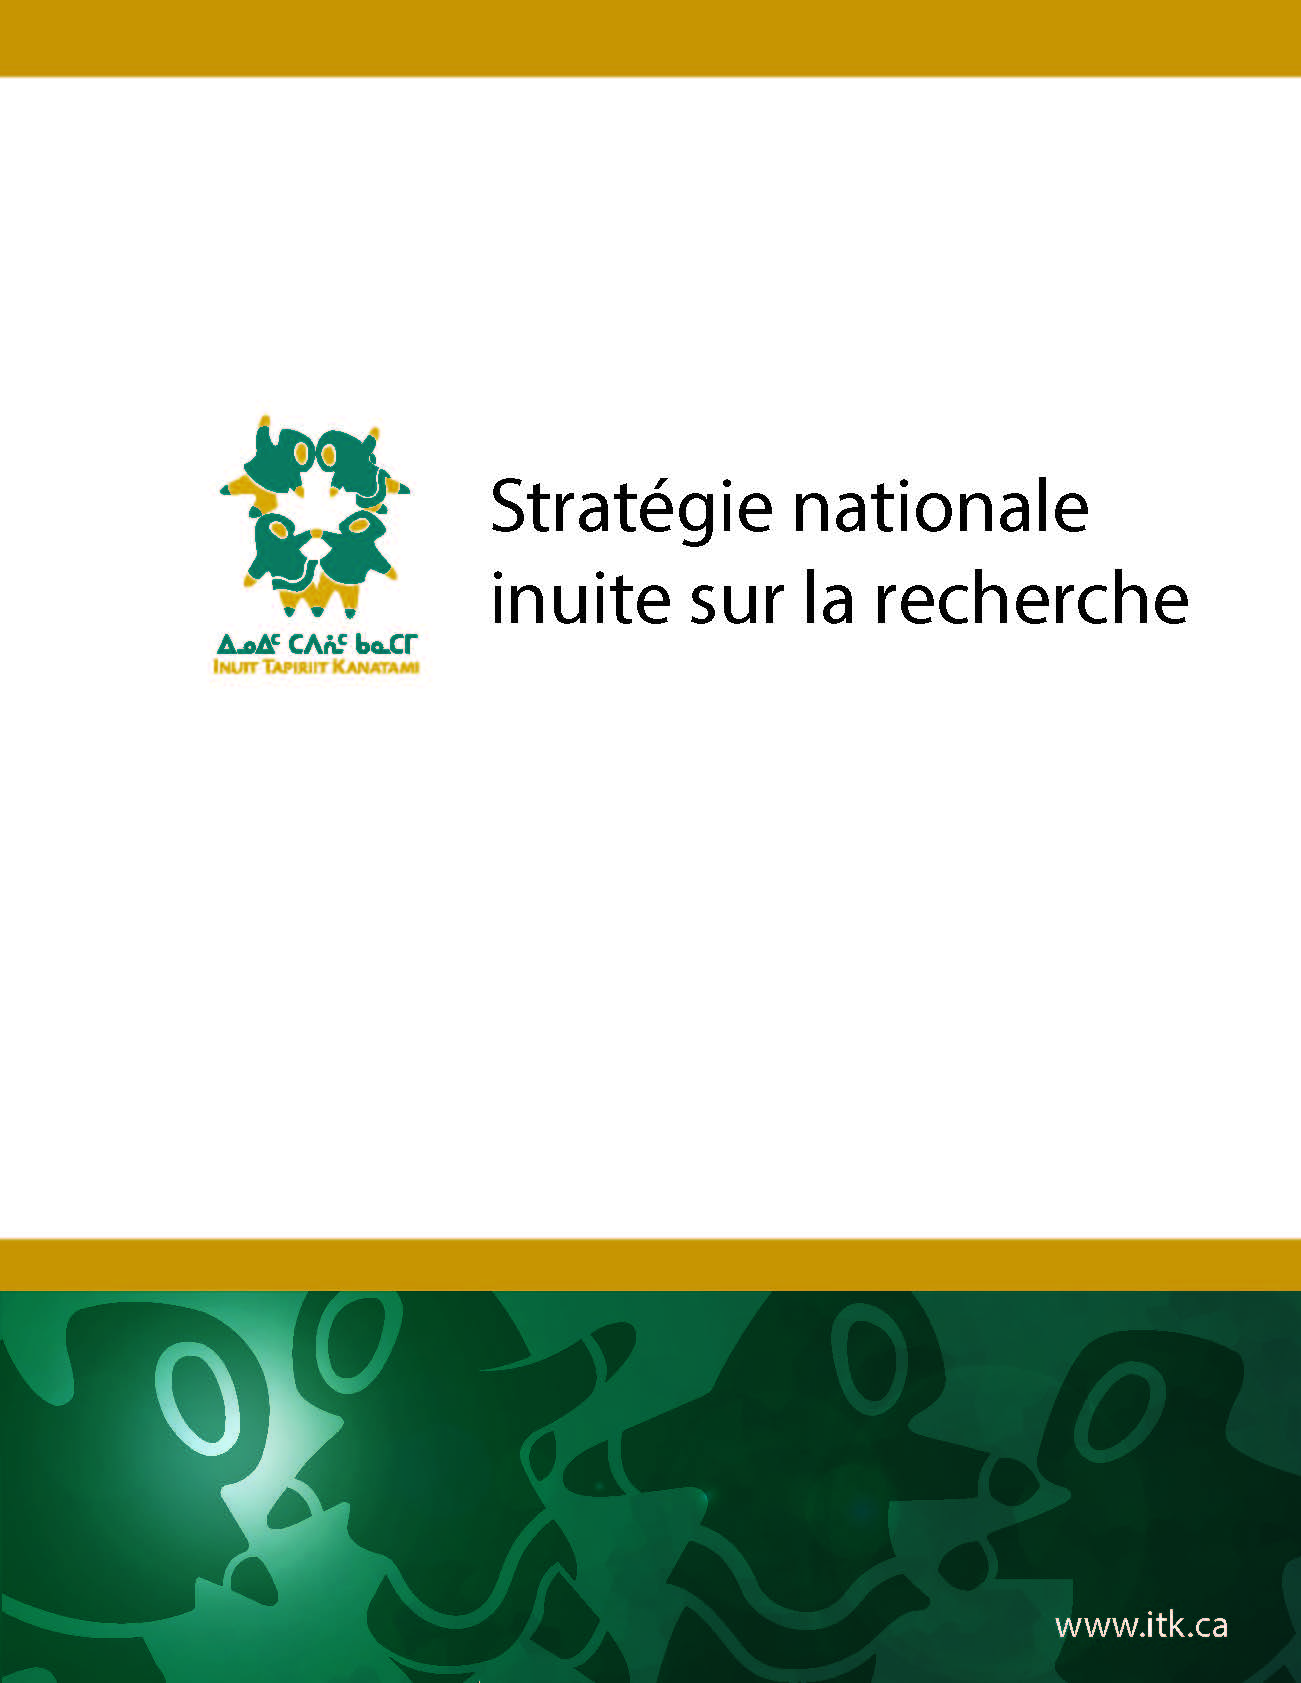 National Inuit Strategy on Research (Inuit Tapiriit Kanatami)